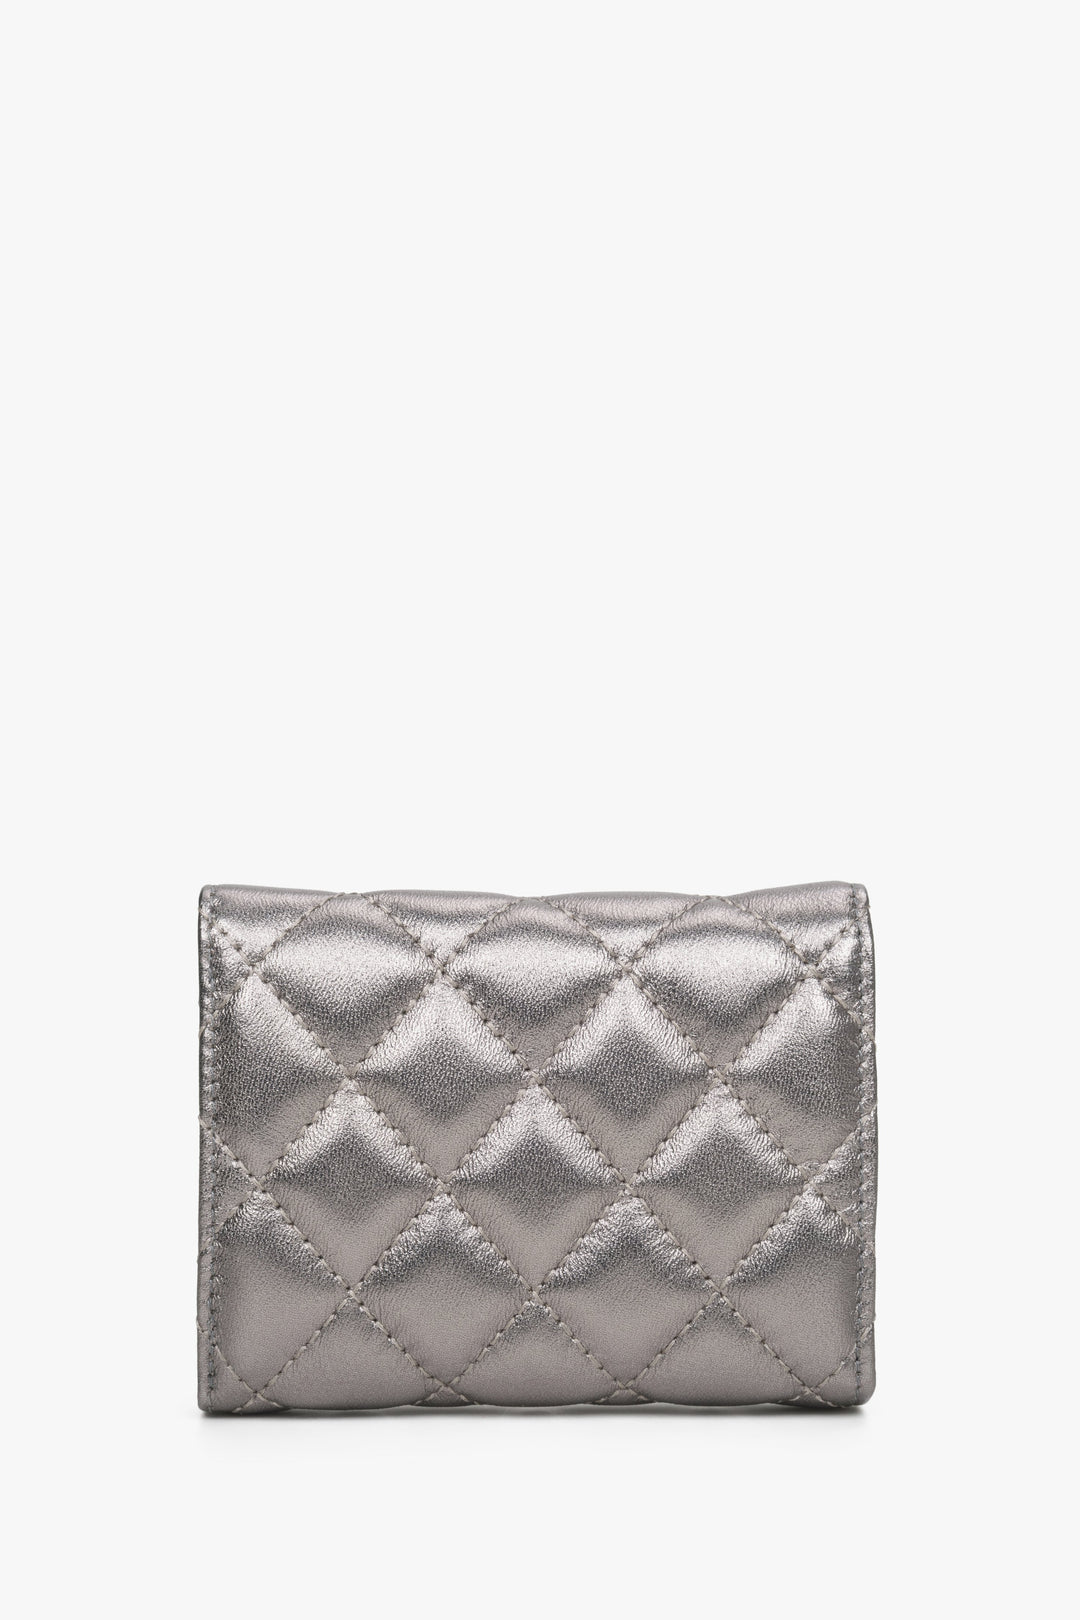 A handy women's silver wallet with Estro embossing - back side.